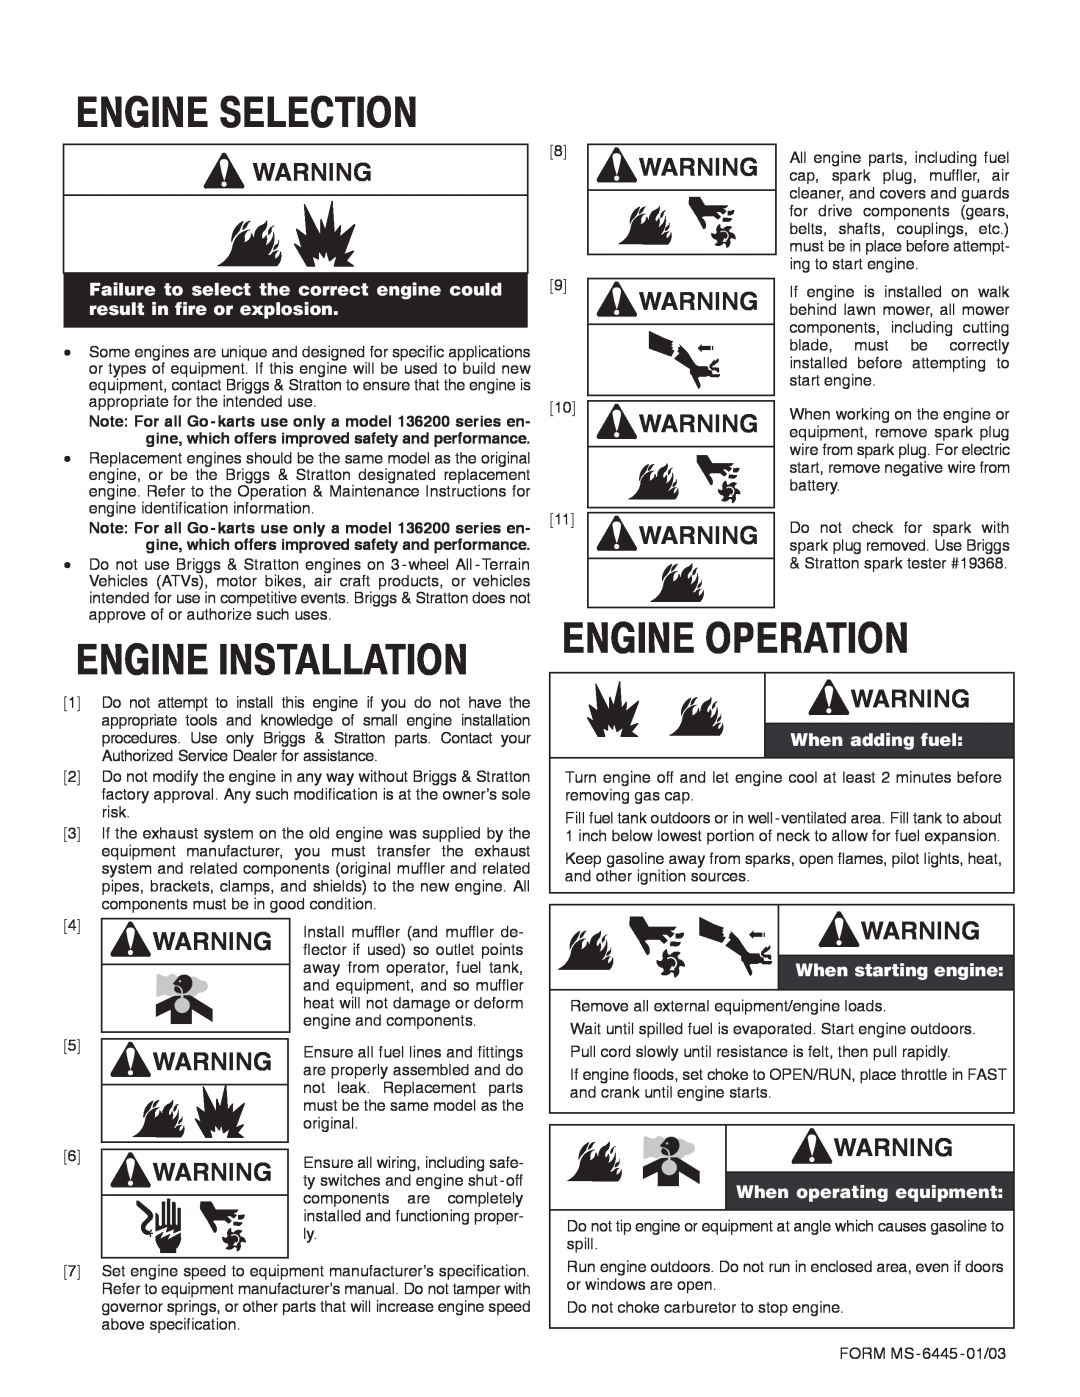 Briggs & Stratton 25540 Engine Selection, Engine Installation, Engine Operation, When adding fuel, When starting engine 